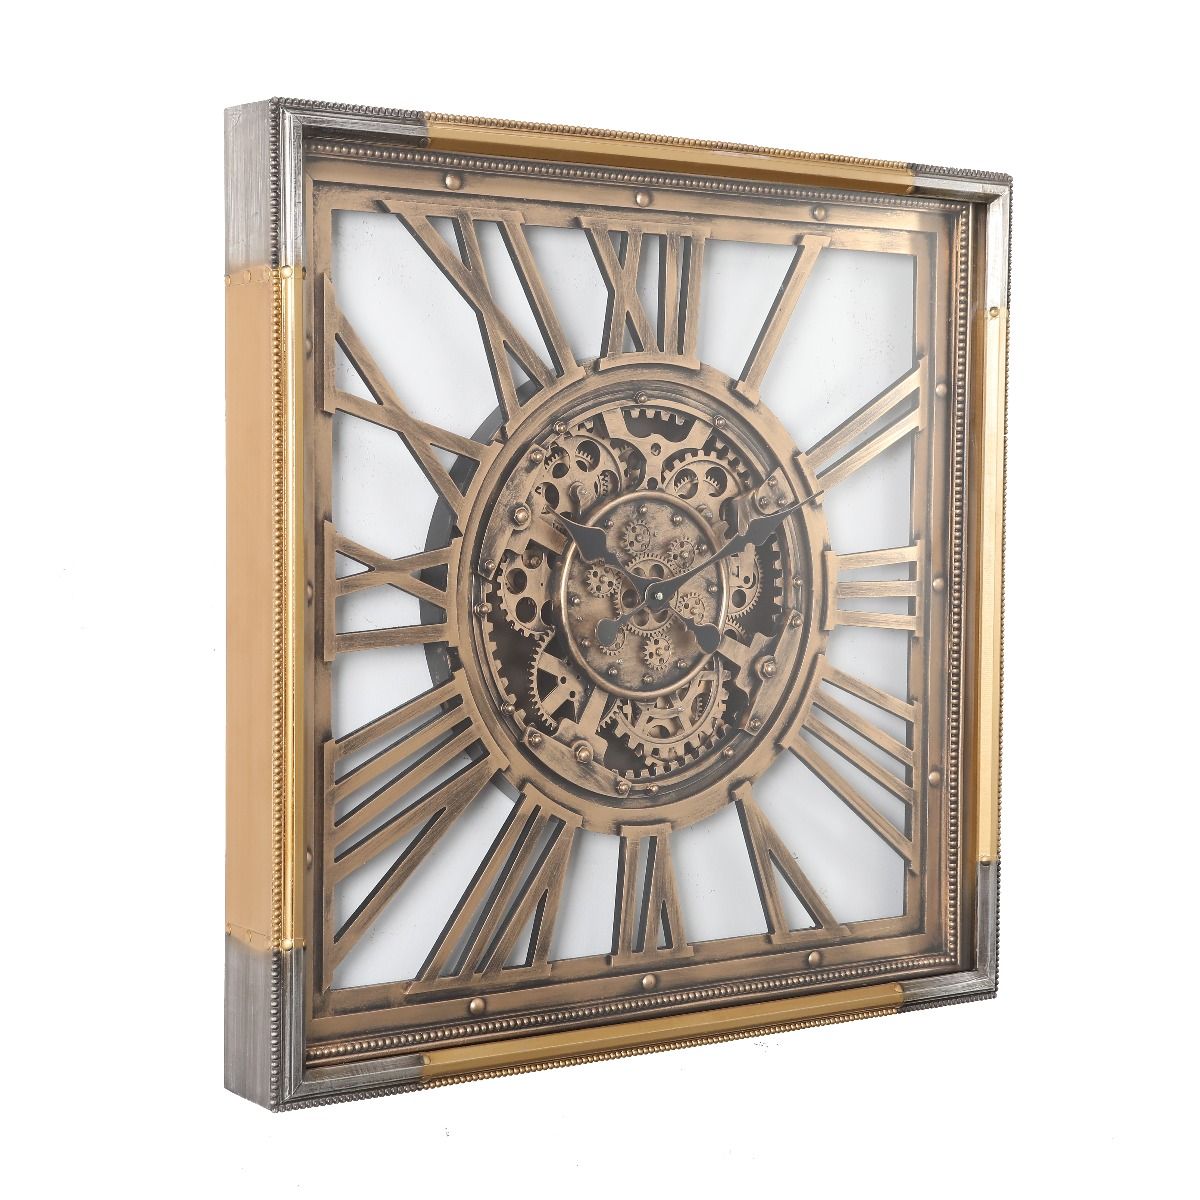 Industrial/vintage-inspired clock range - MODEL 030